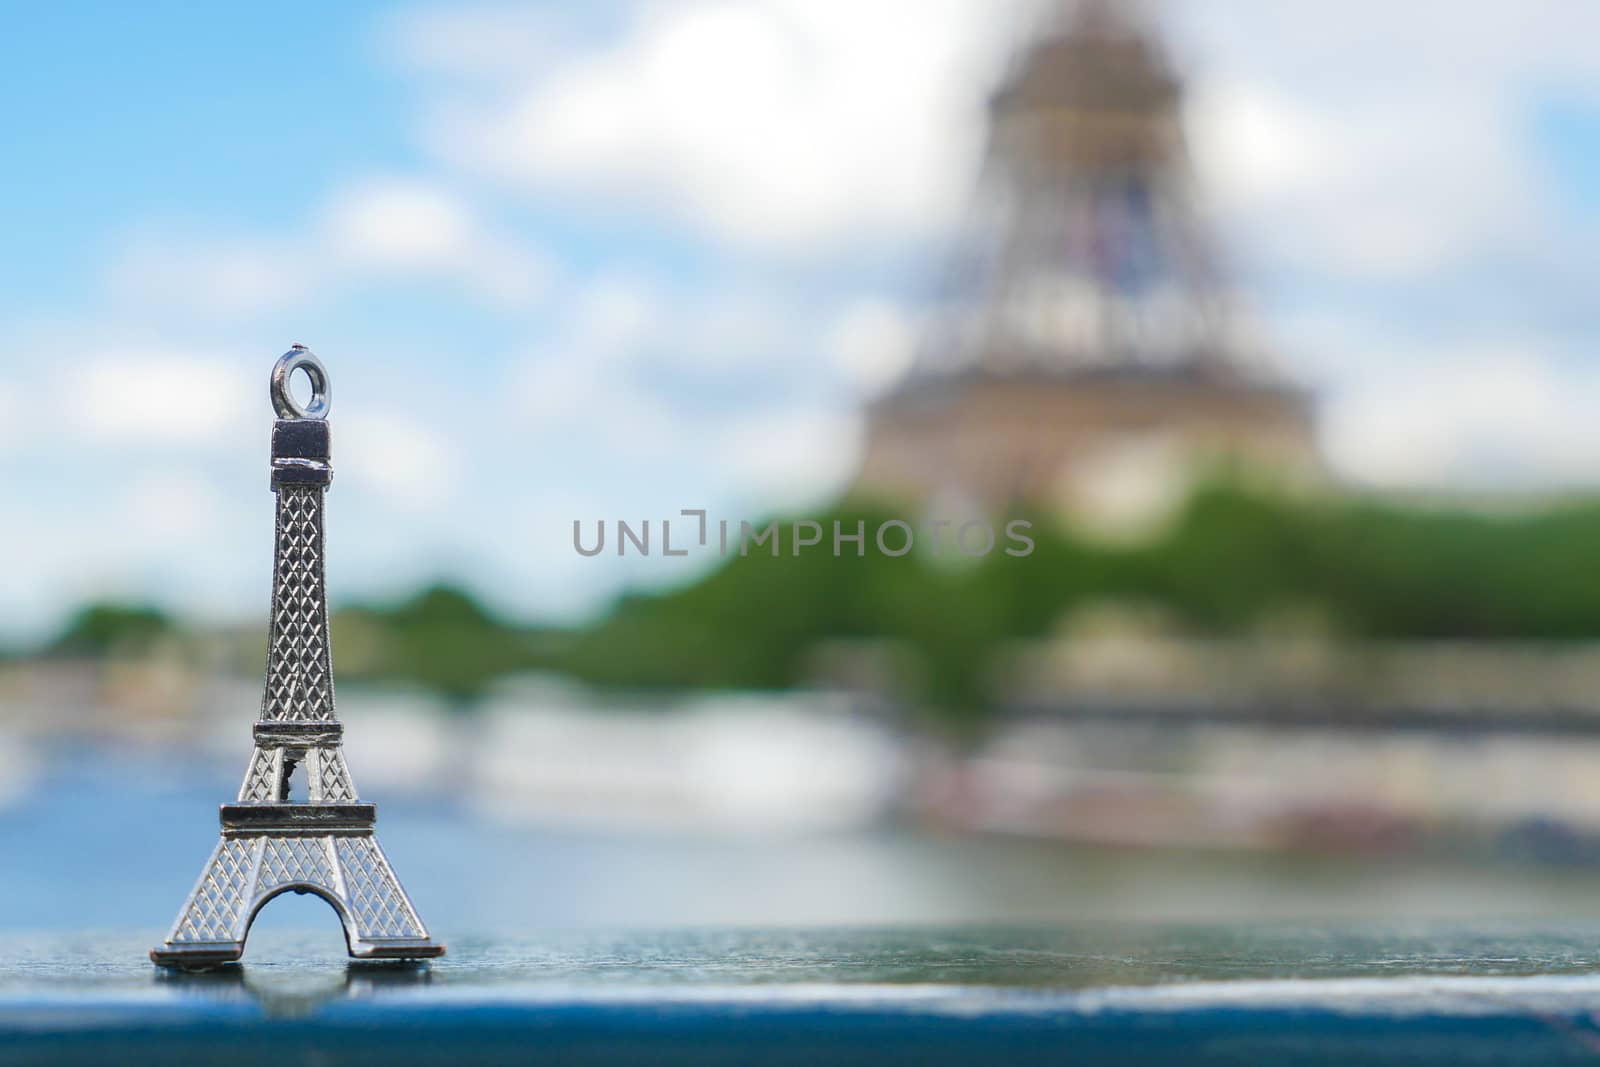 Paris Best Destinations in Europe by FreeProd